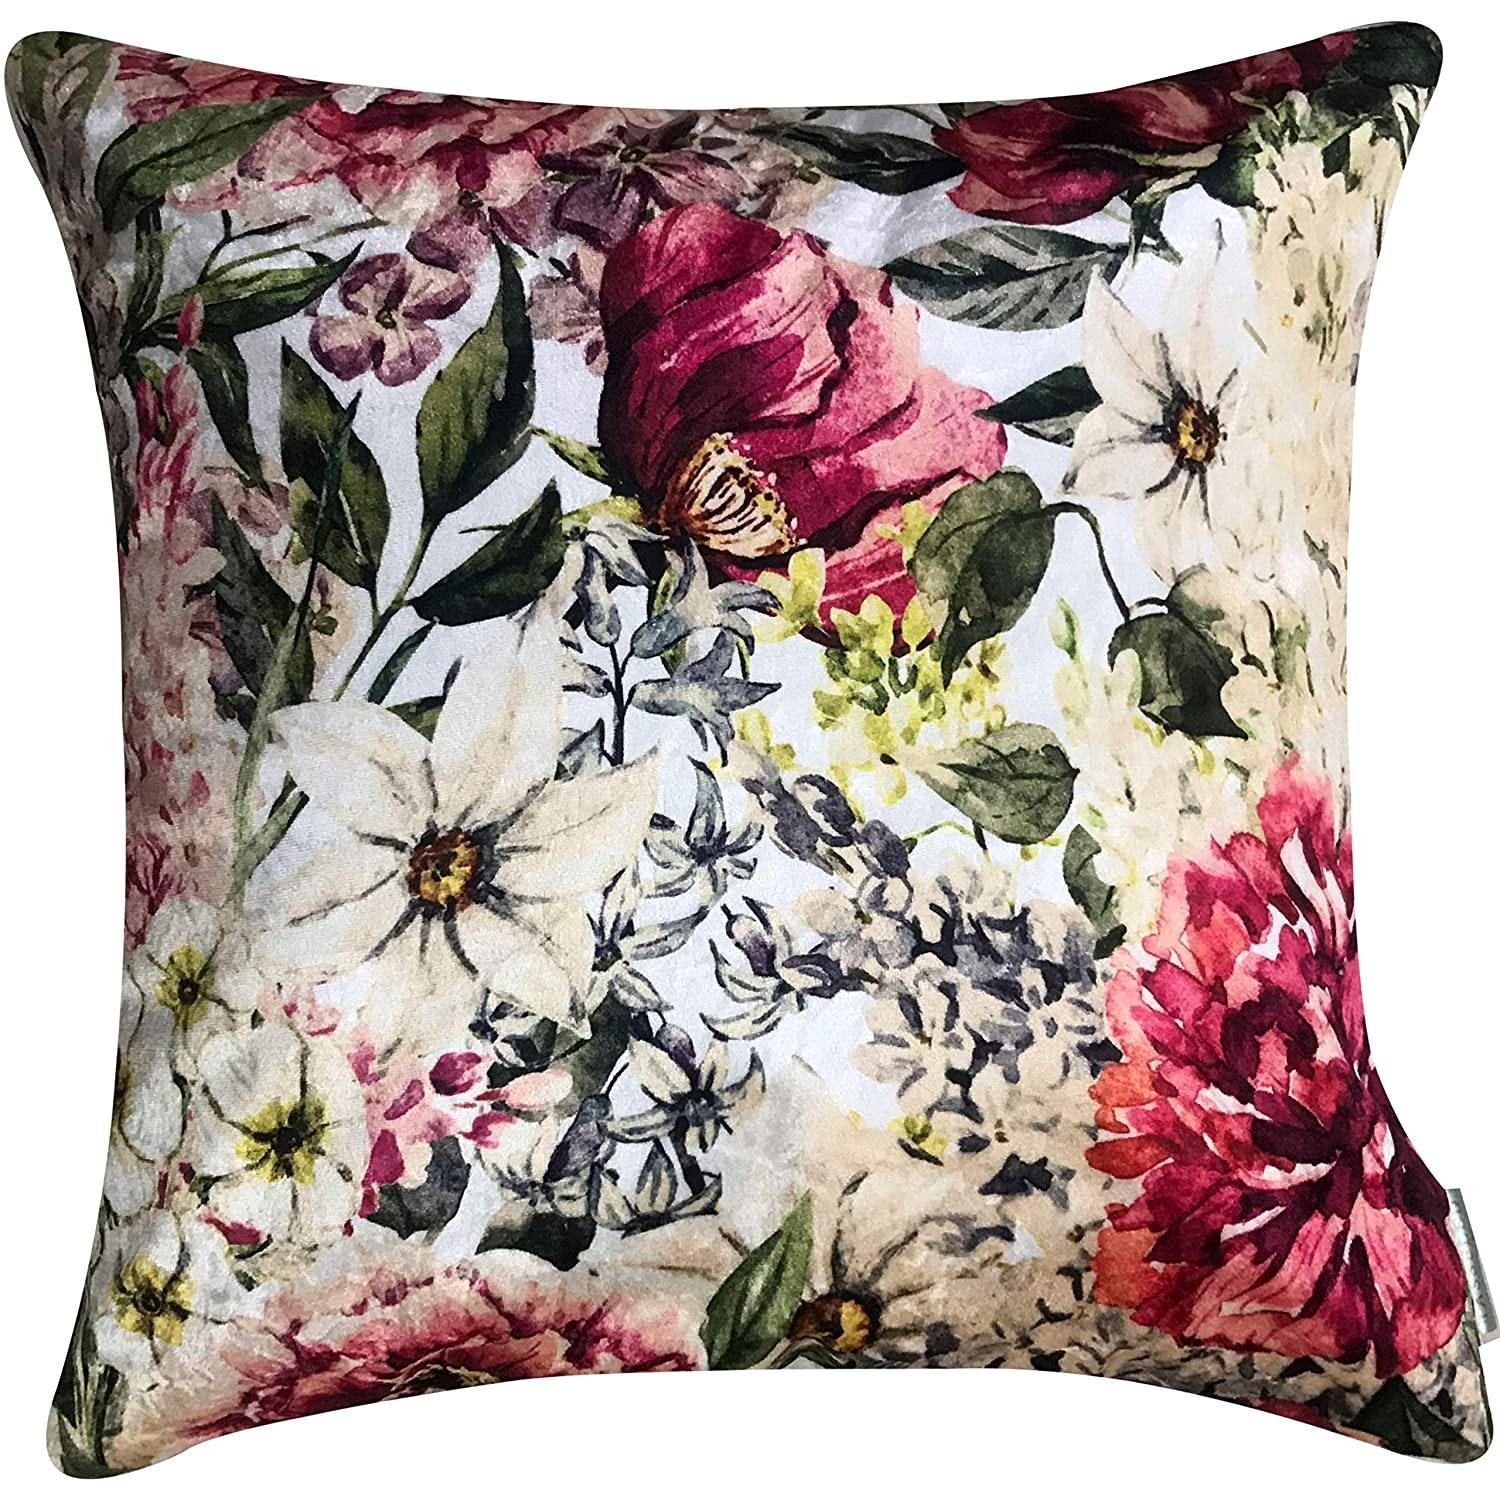 Marina Blossom Crushed Velvet Cushion Cover (Multicolour, 20 x 20 inch)